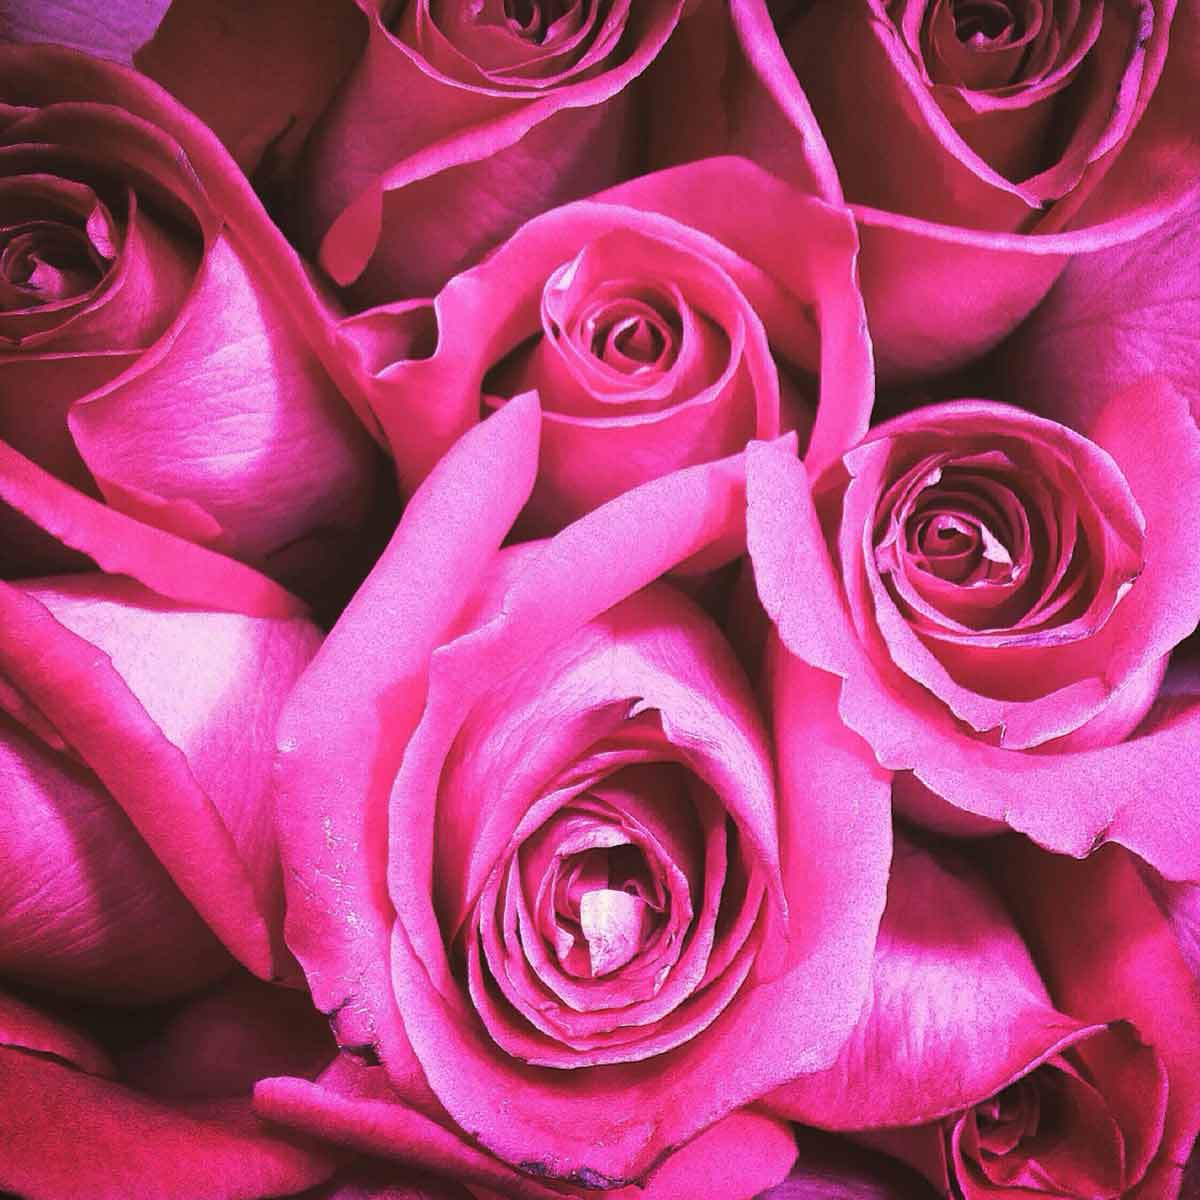 6 Hot Pink Roses in a Vase